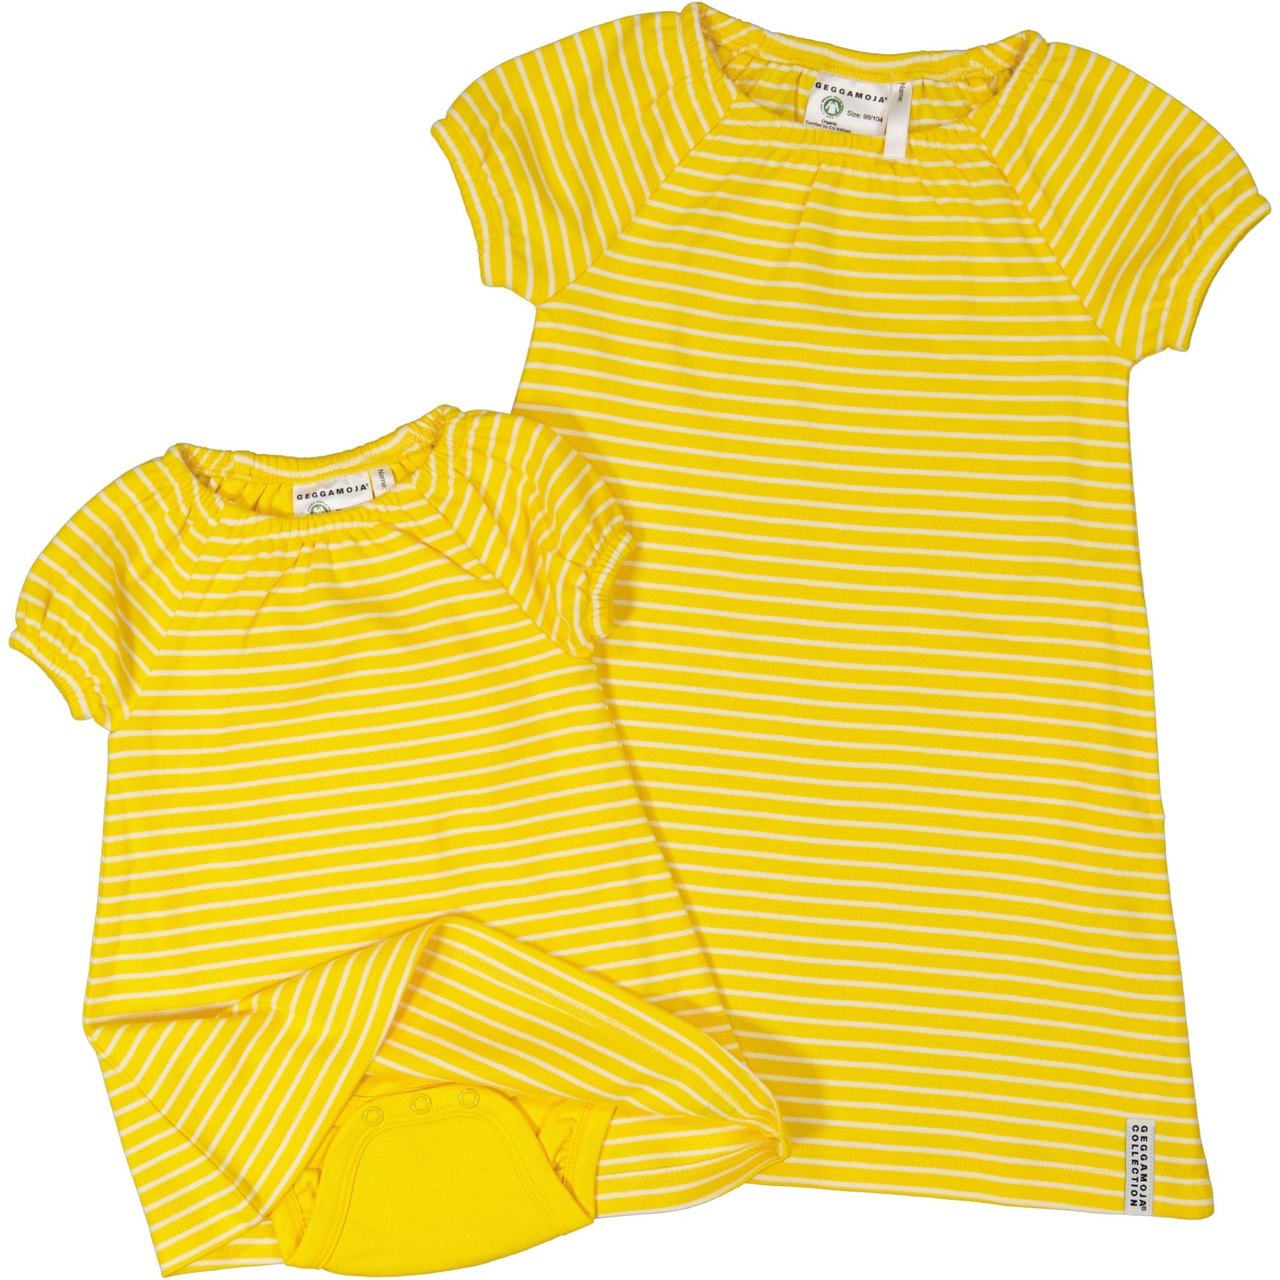 Singoalla dress Yellow/white  122/128